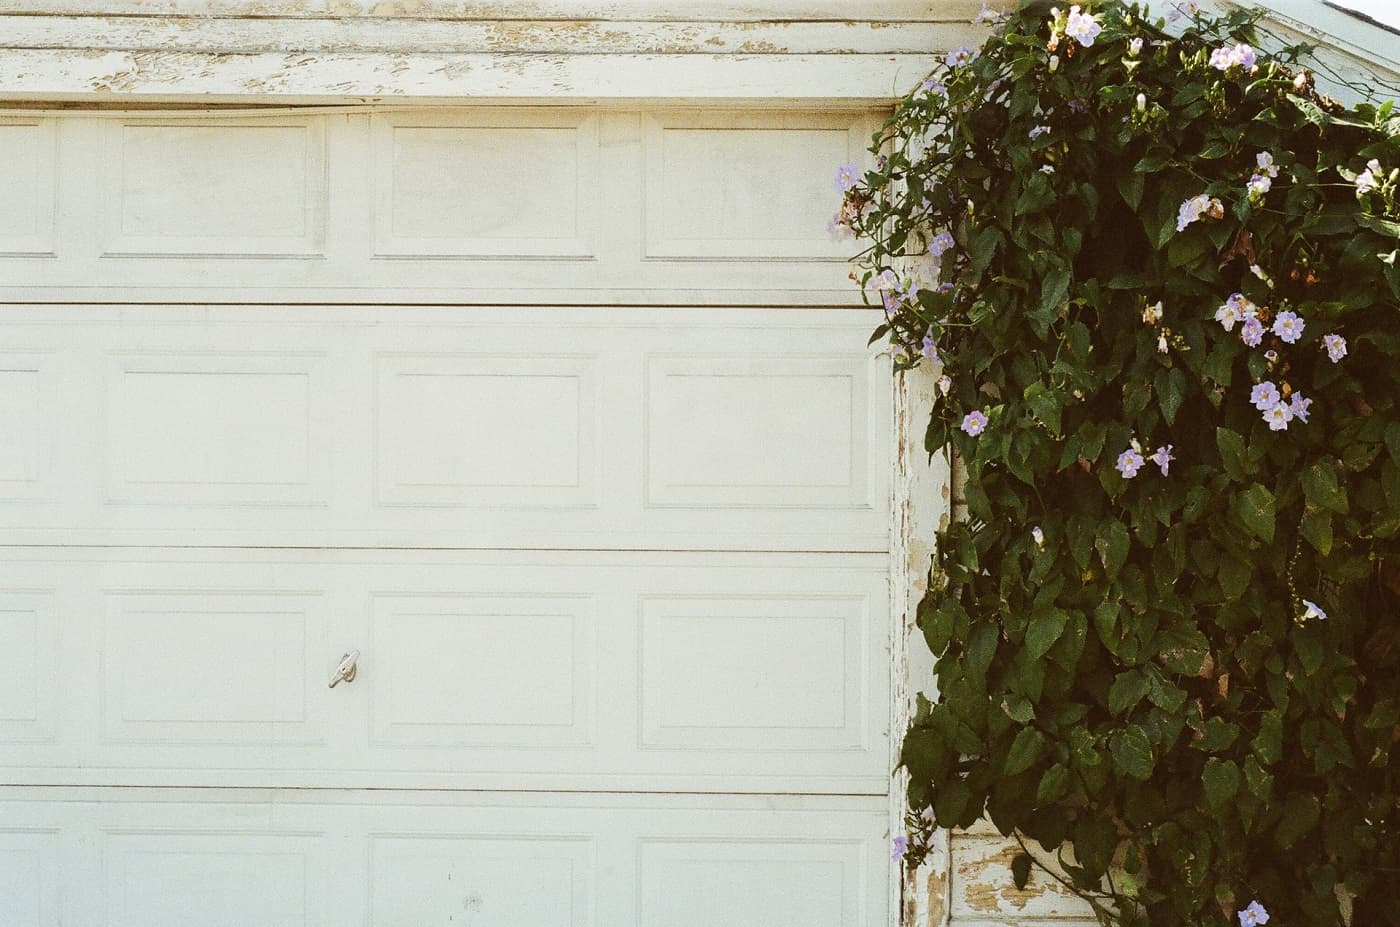 Garage door with plant beside it. Photo from Jaymantri via Pexels.